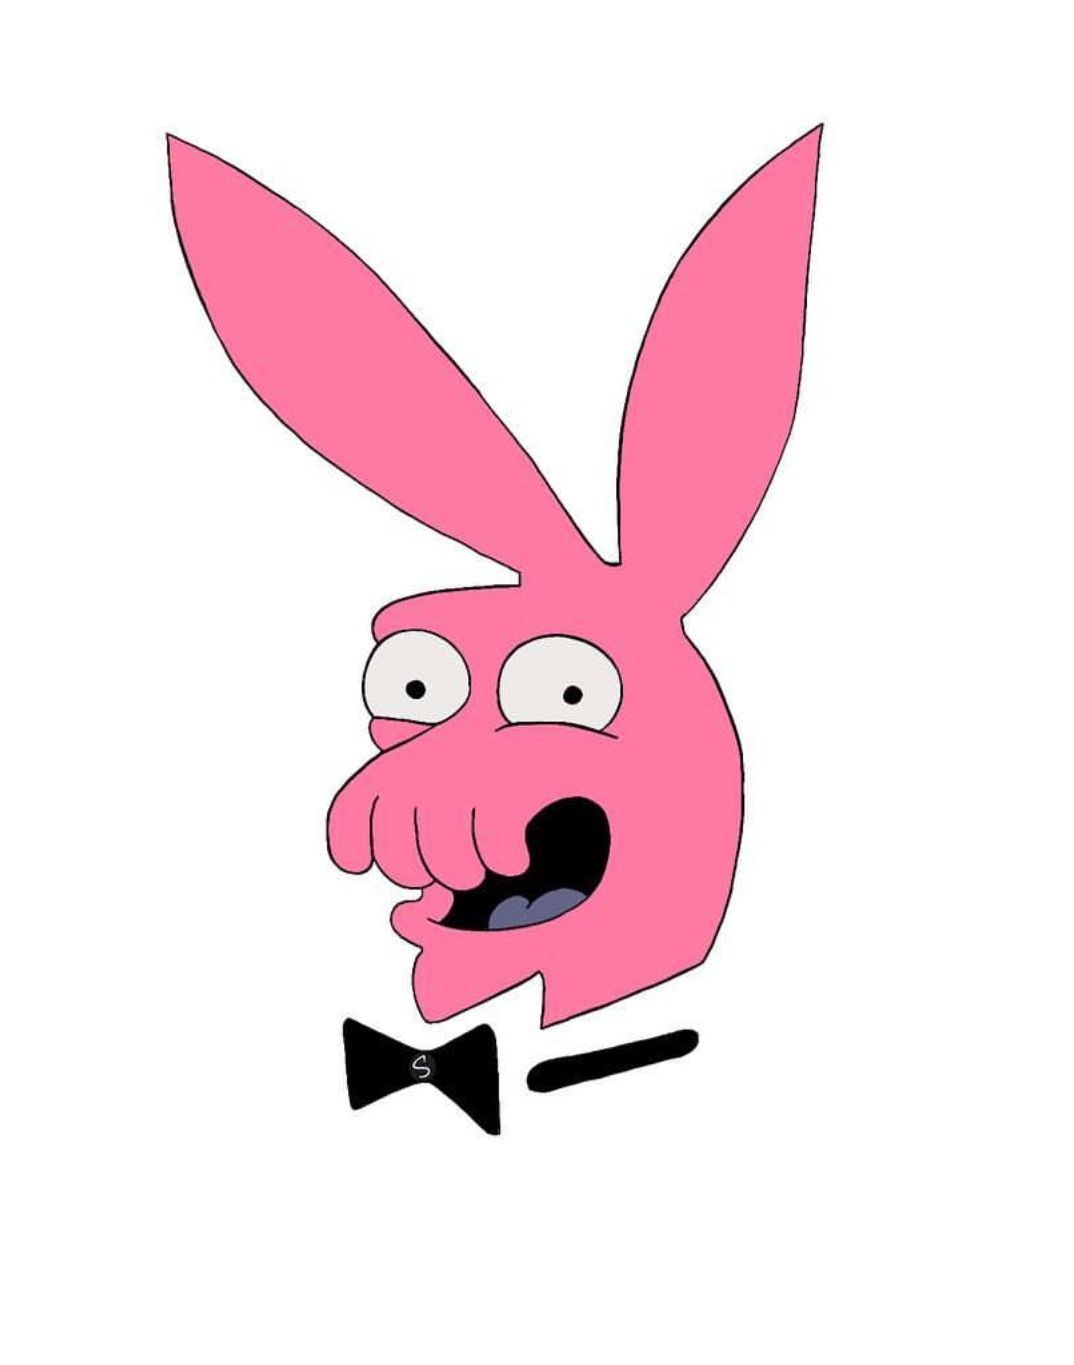 Playboy Bunny Zoidberg, Futurama - Playboy Bunny Logo With Tear , HD Wallpaper & Backgrounds